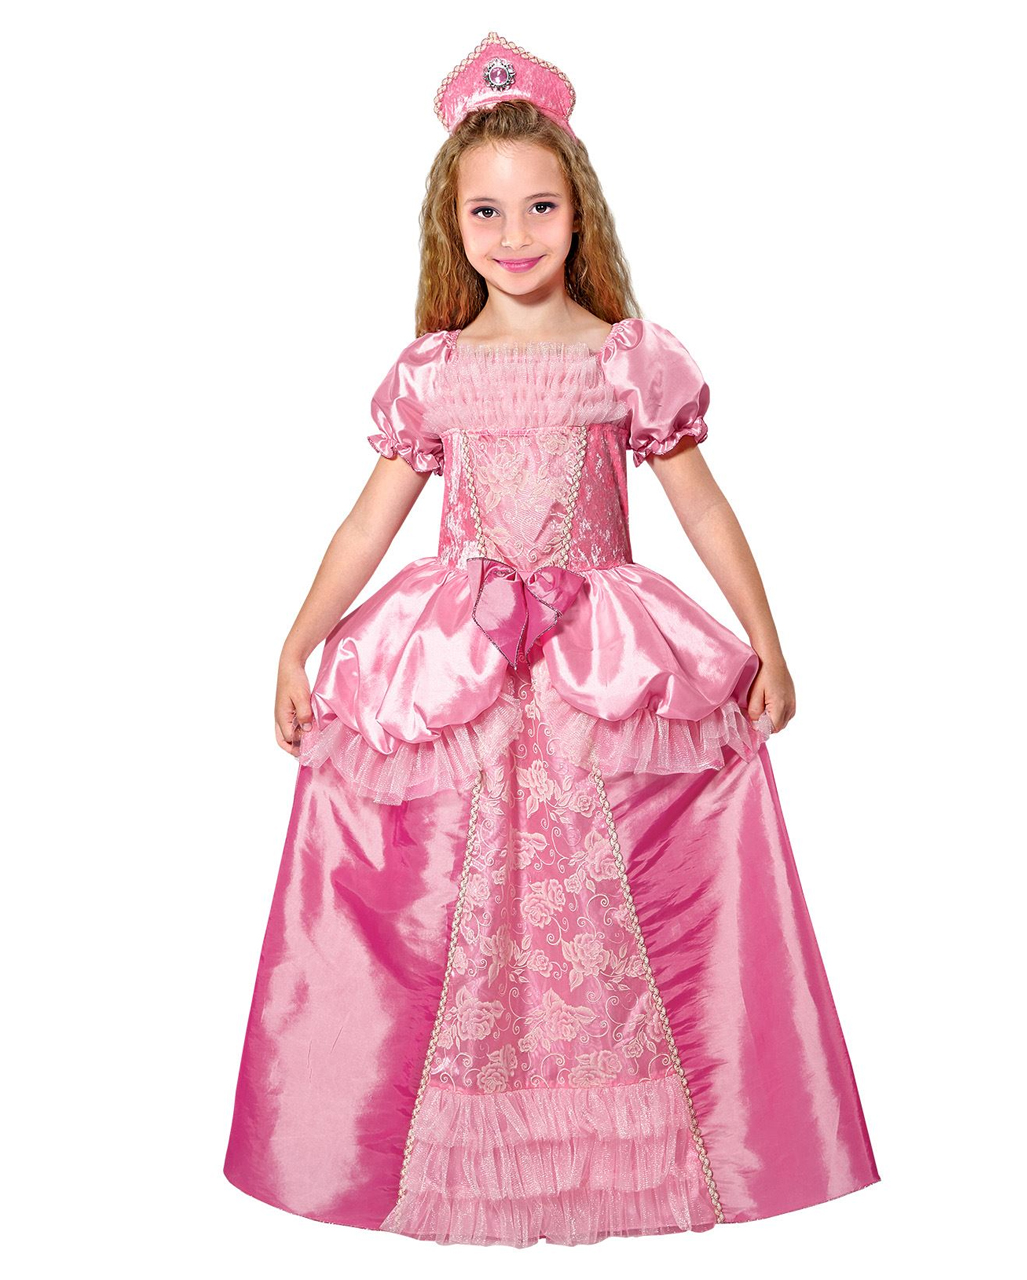 Spartys Princess Dress Kids Costume Pink